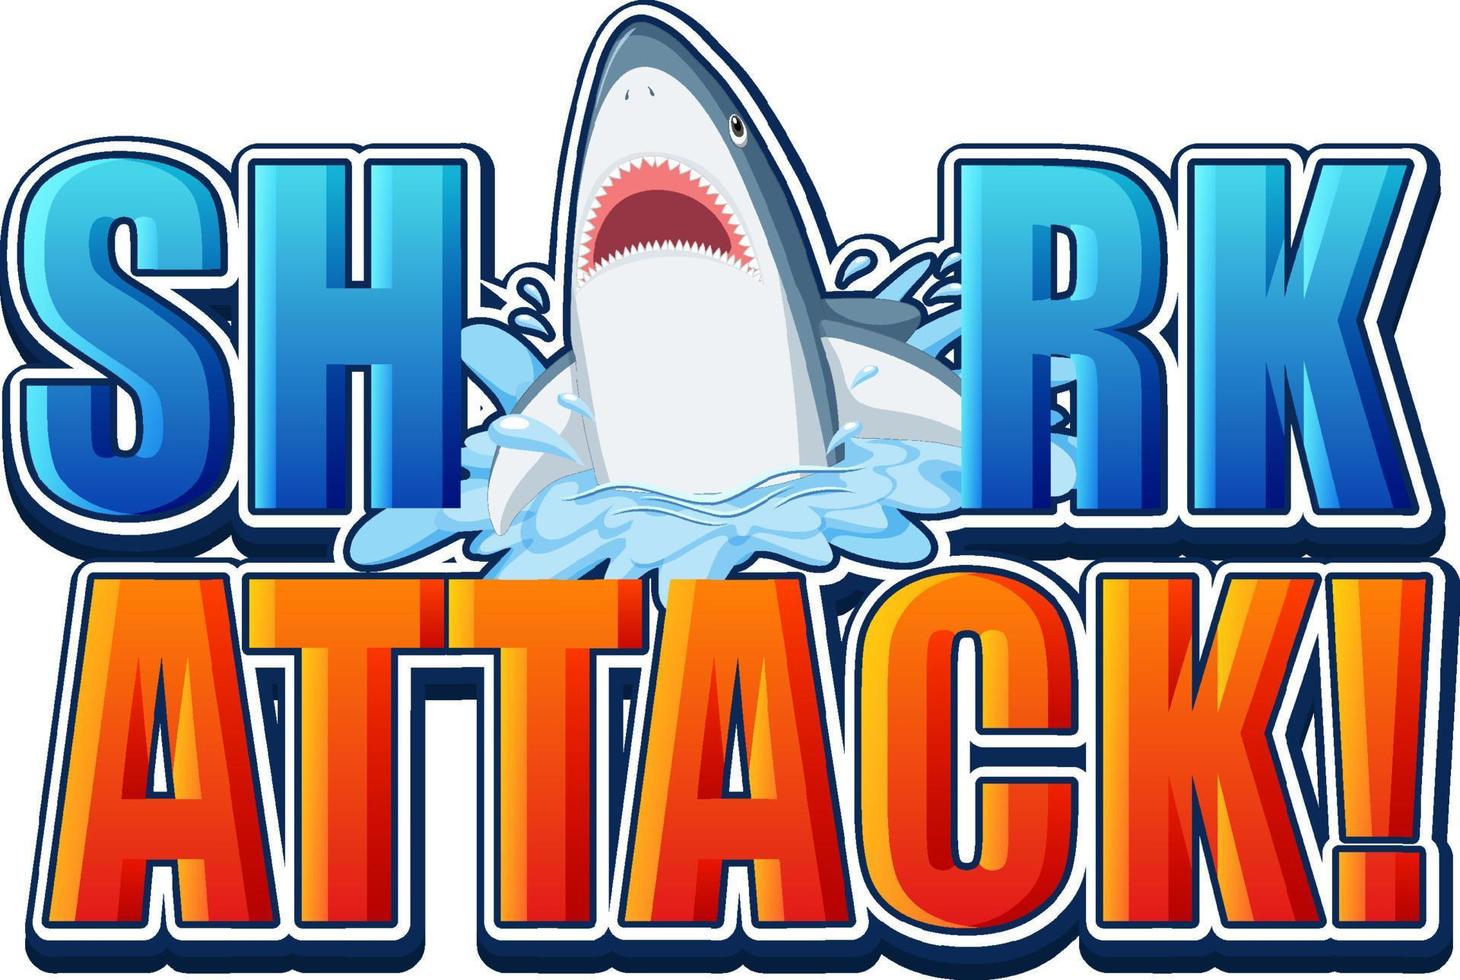 logo de police d'attaque de requin avec requin agressif de dessin animé vecteur